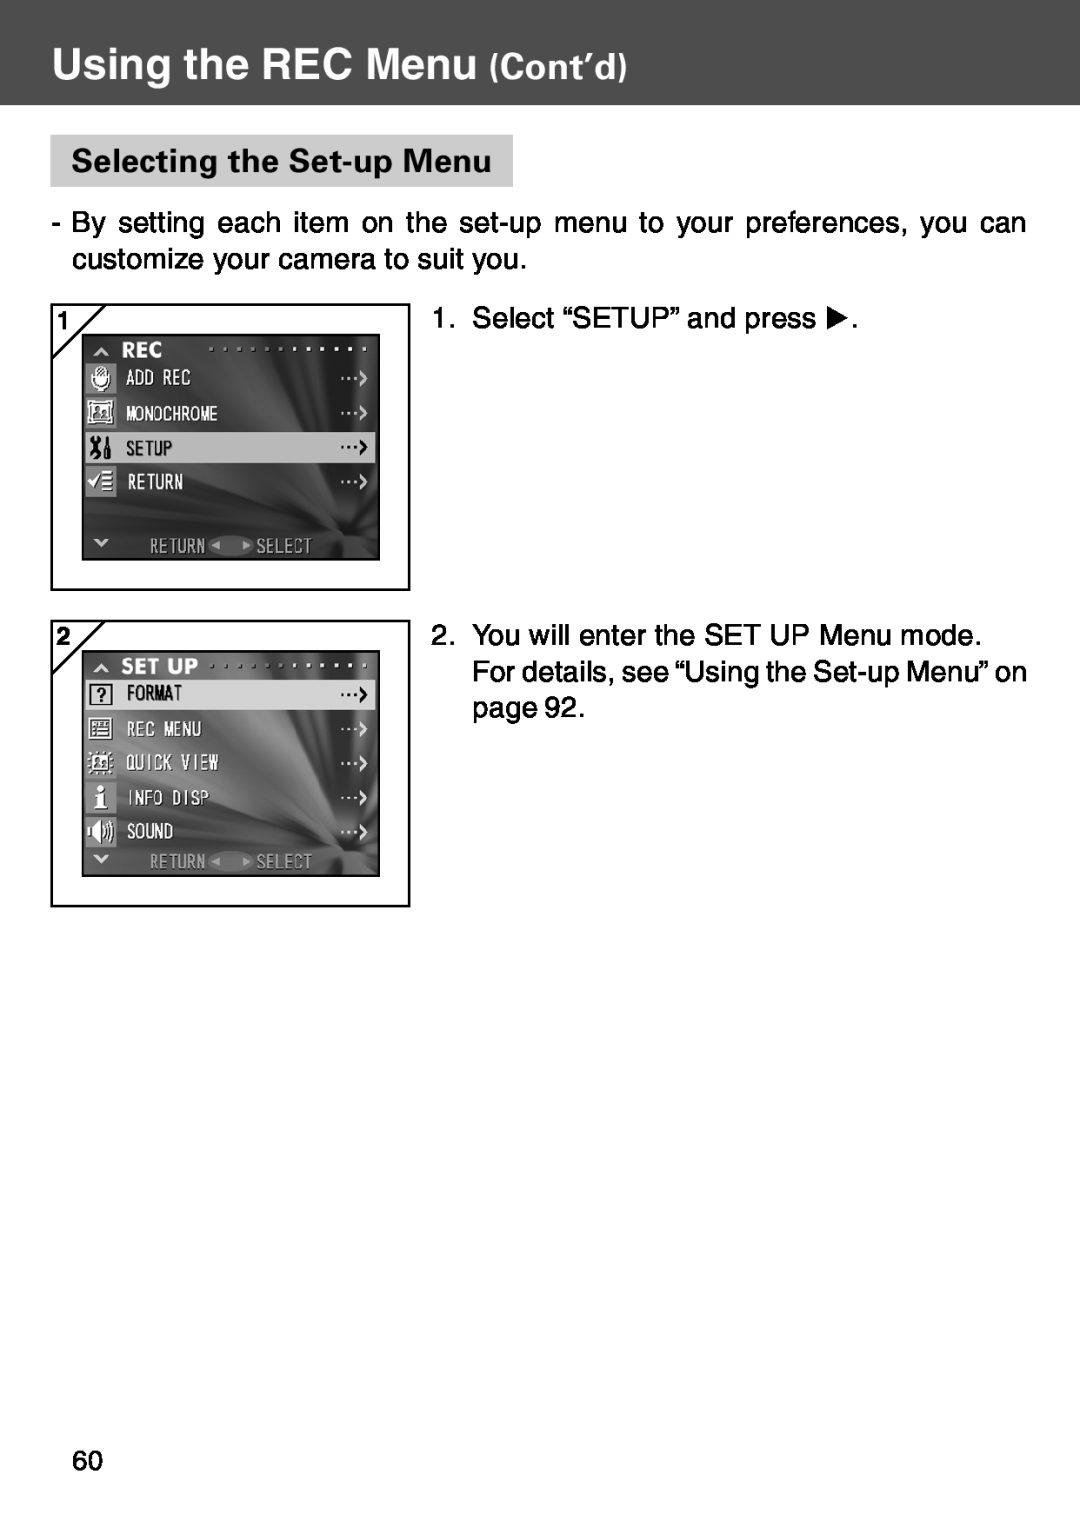 Konica Minolta KD-500Z user manual Selecting the Set-up Menu, Using the REC Menu Cont’d 